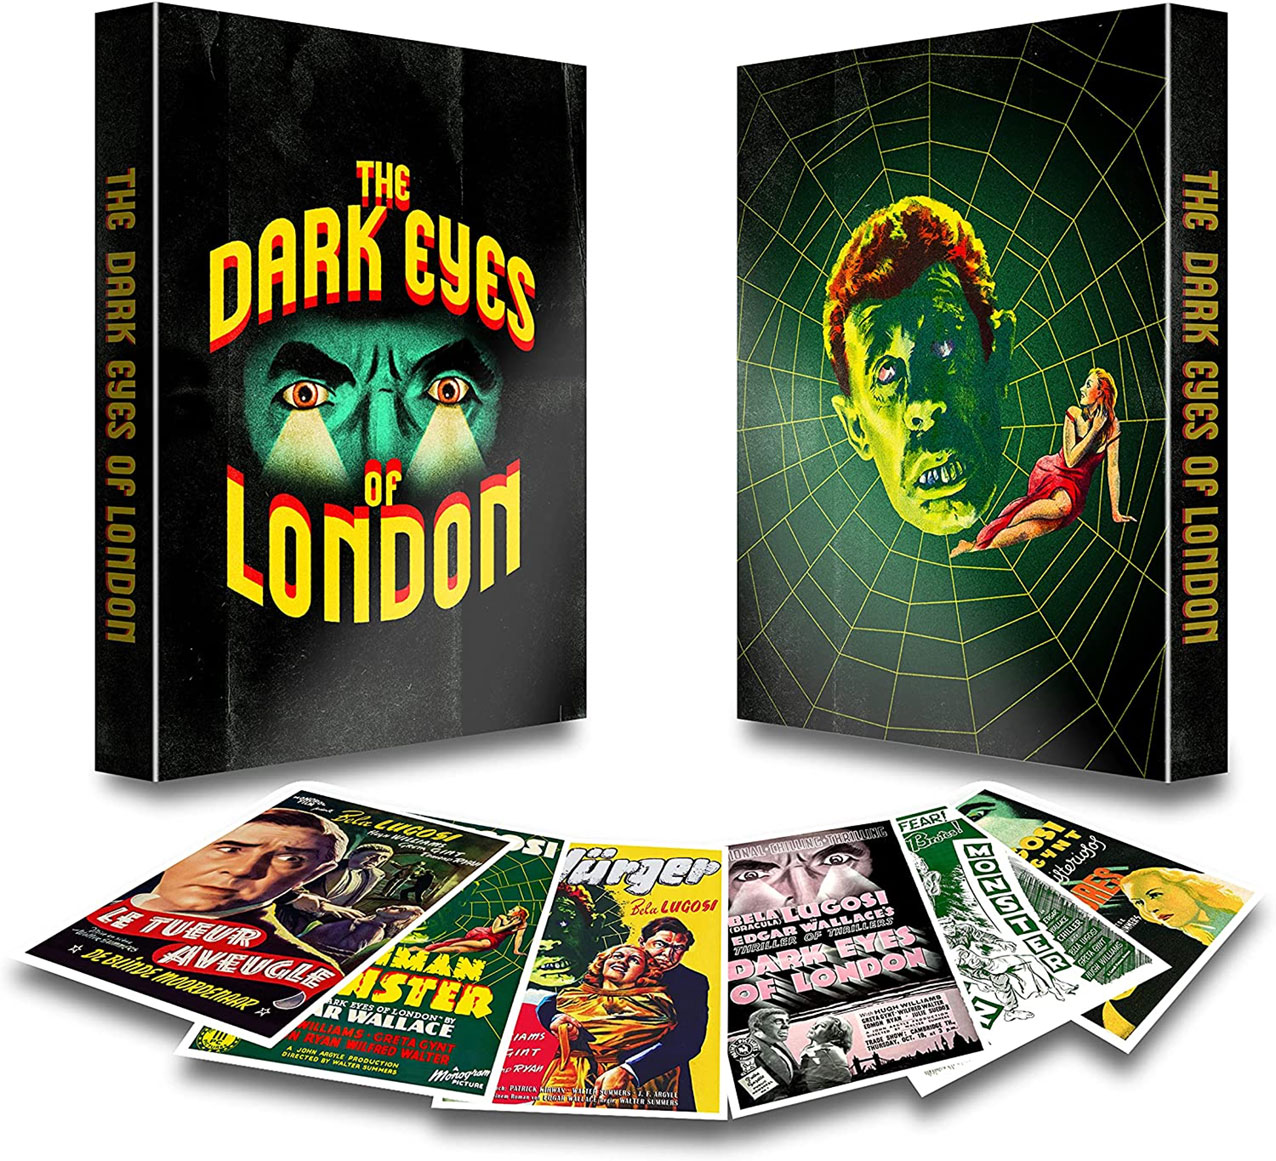 The Dark Eyes of London Blu-ray pack shot